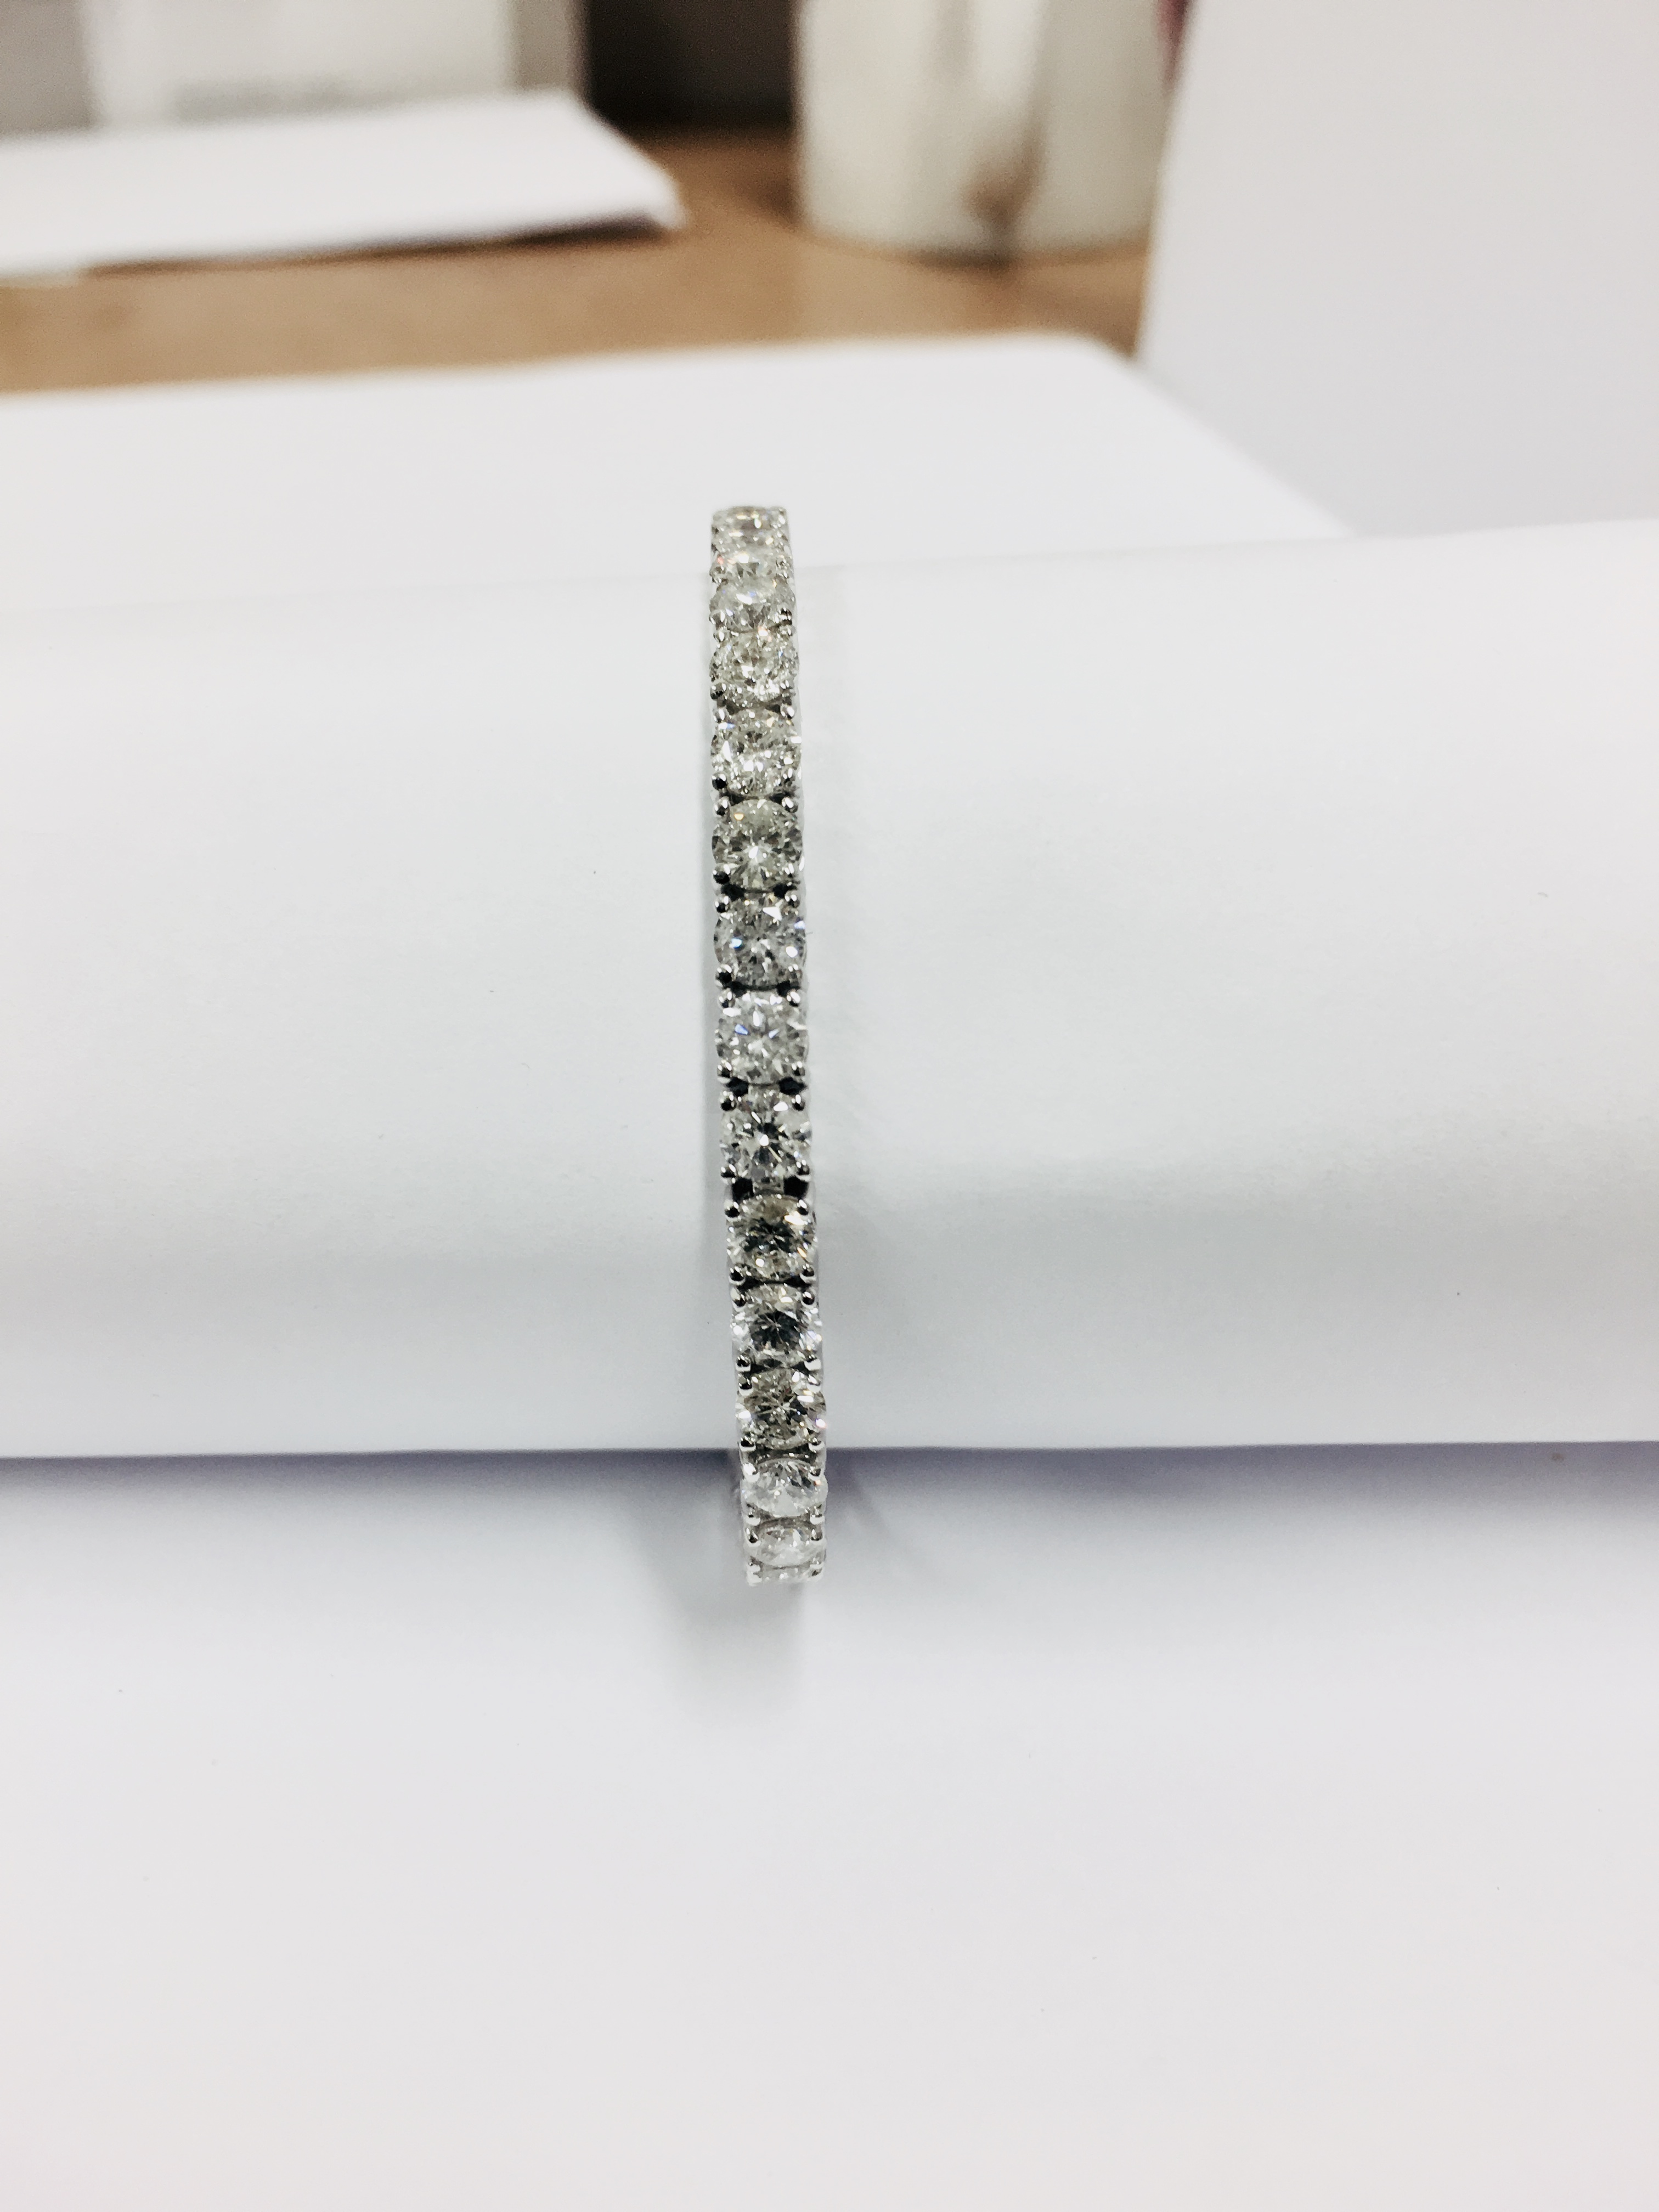 10.50ct Diamond tennis bracelet set with brilliant cut diamonds of H colour - Image 5 of 7